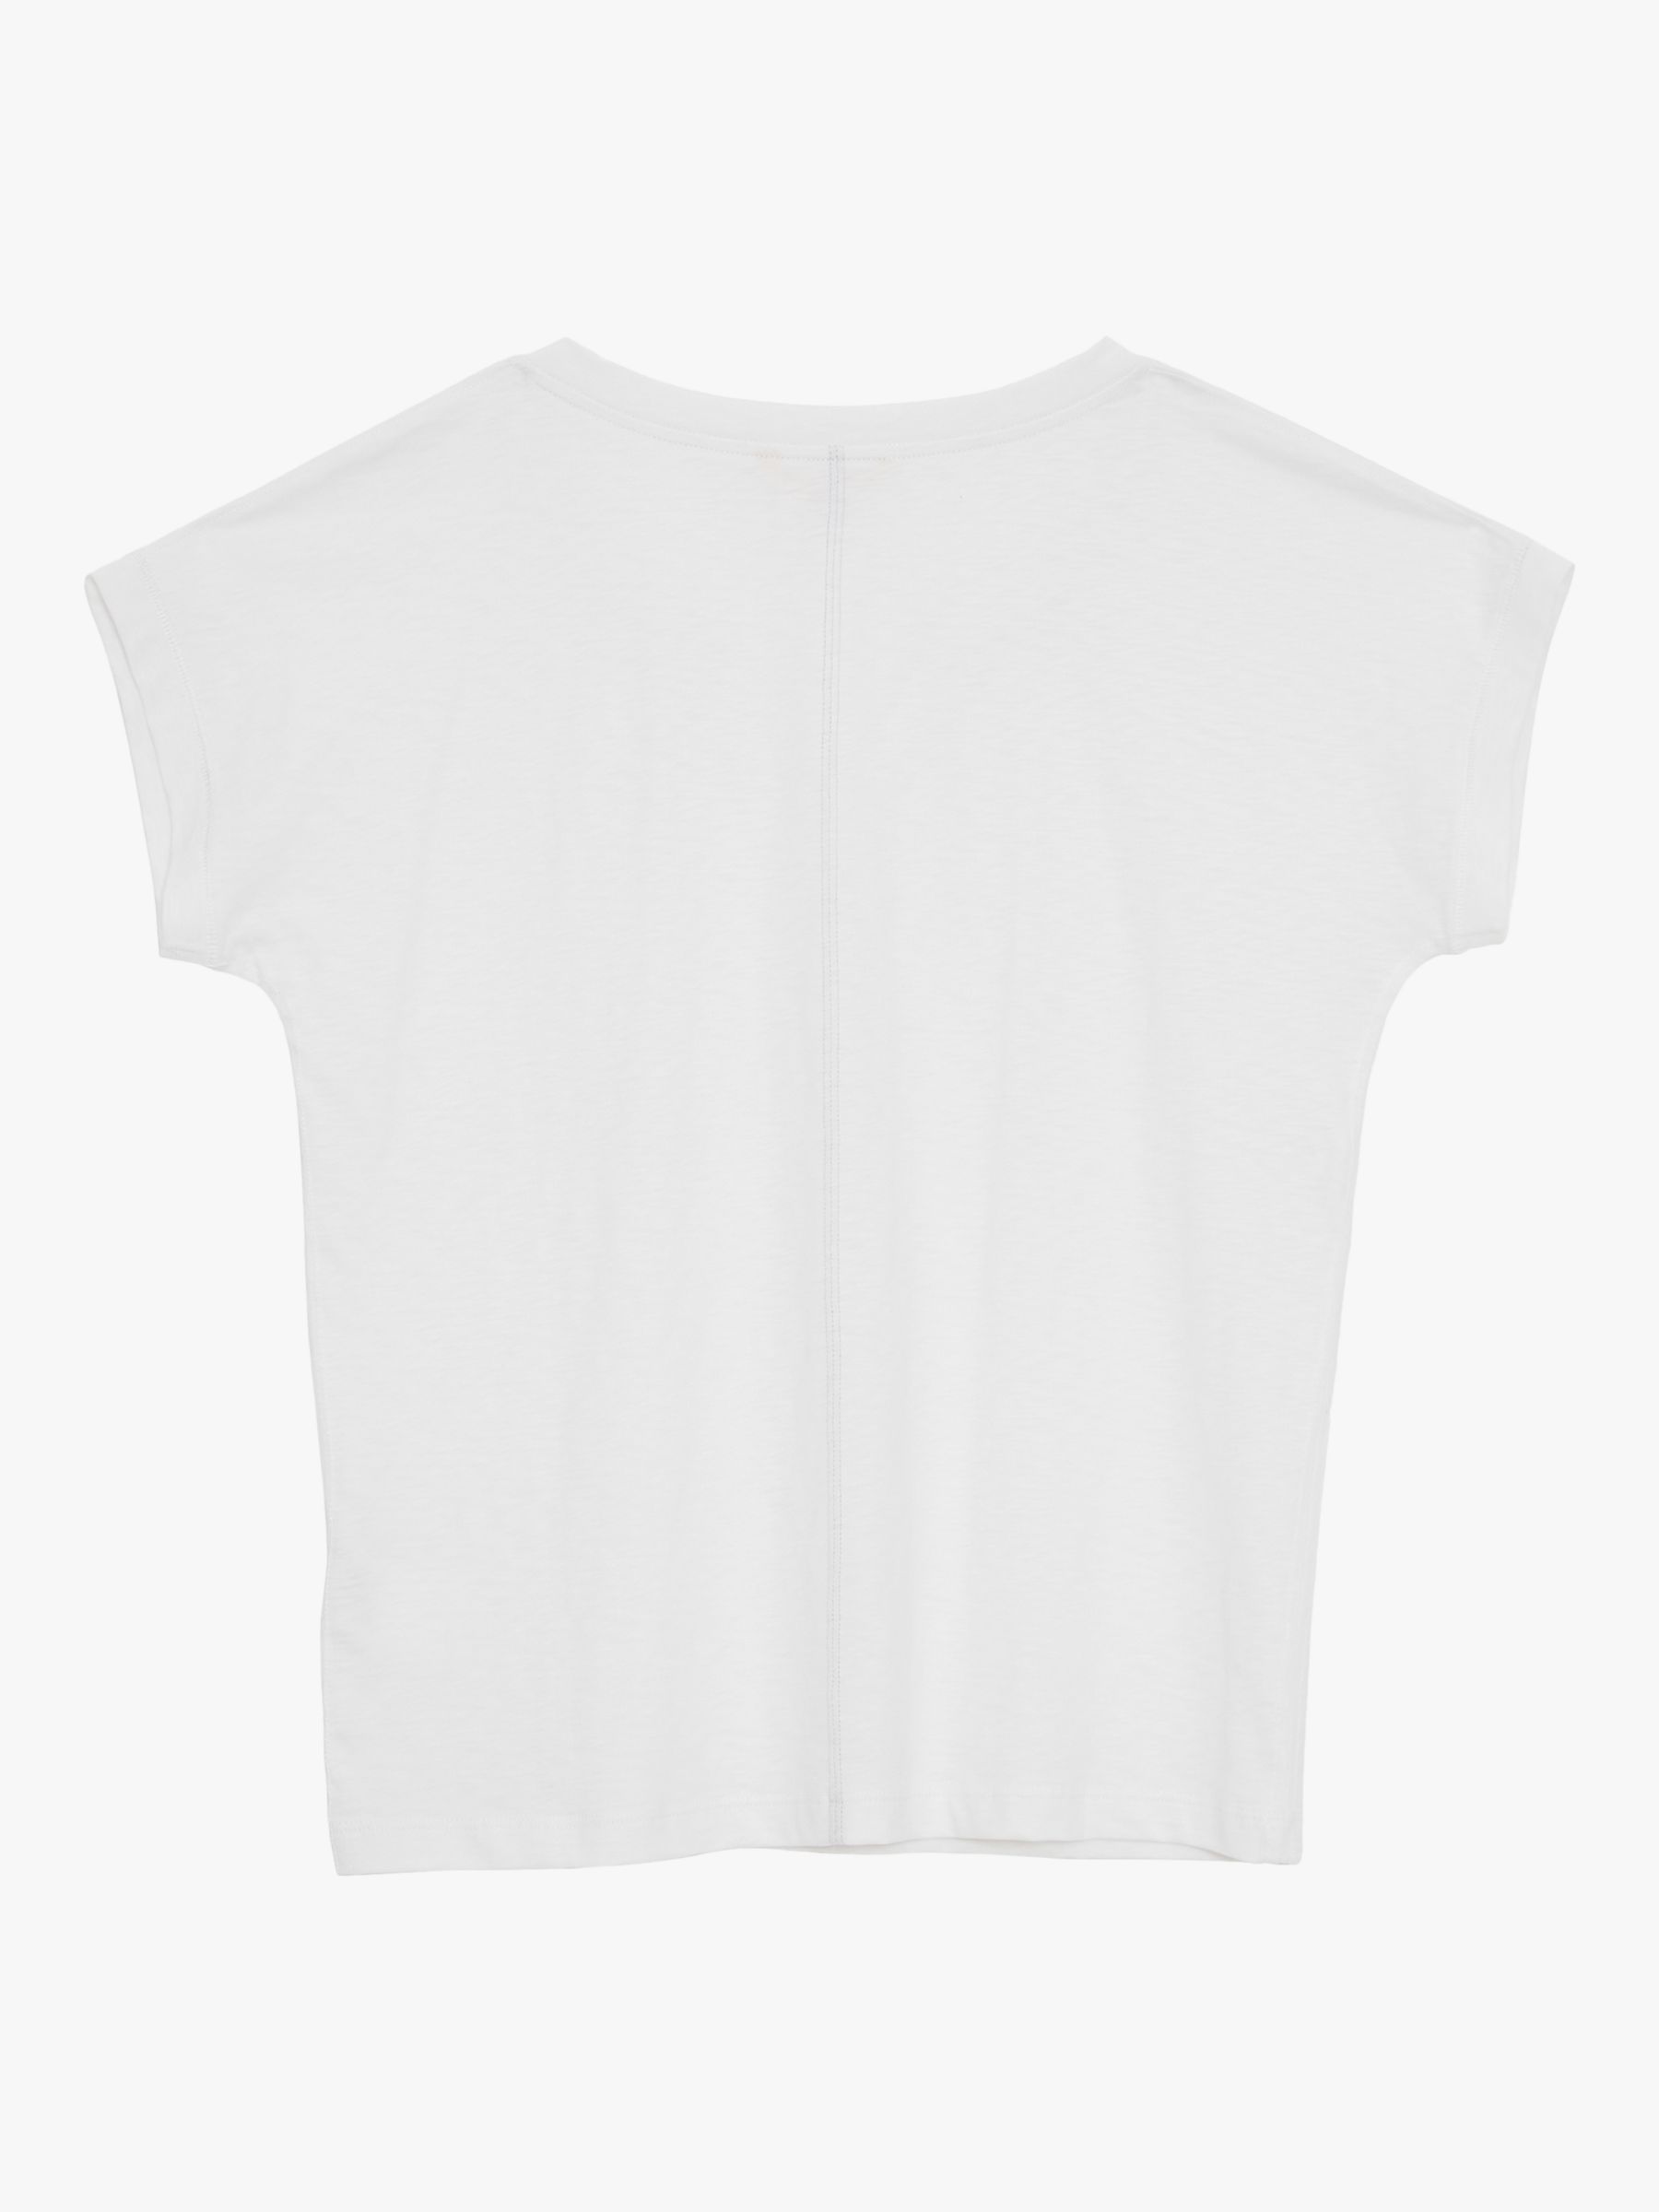 White Stuff Nelly Notch T-Shirt, Brilliant White at John Lewis & Partners